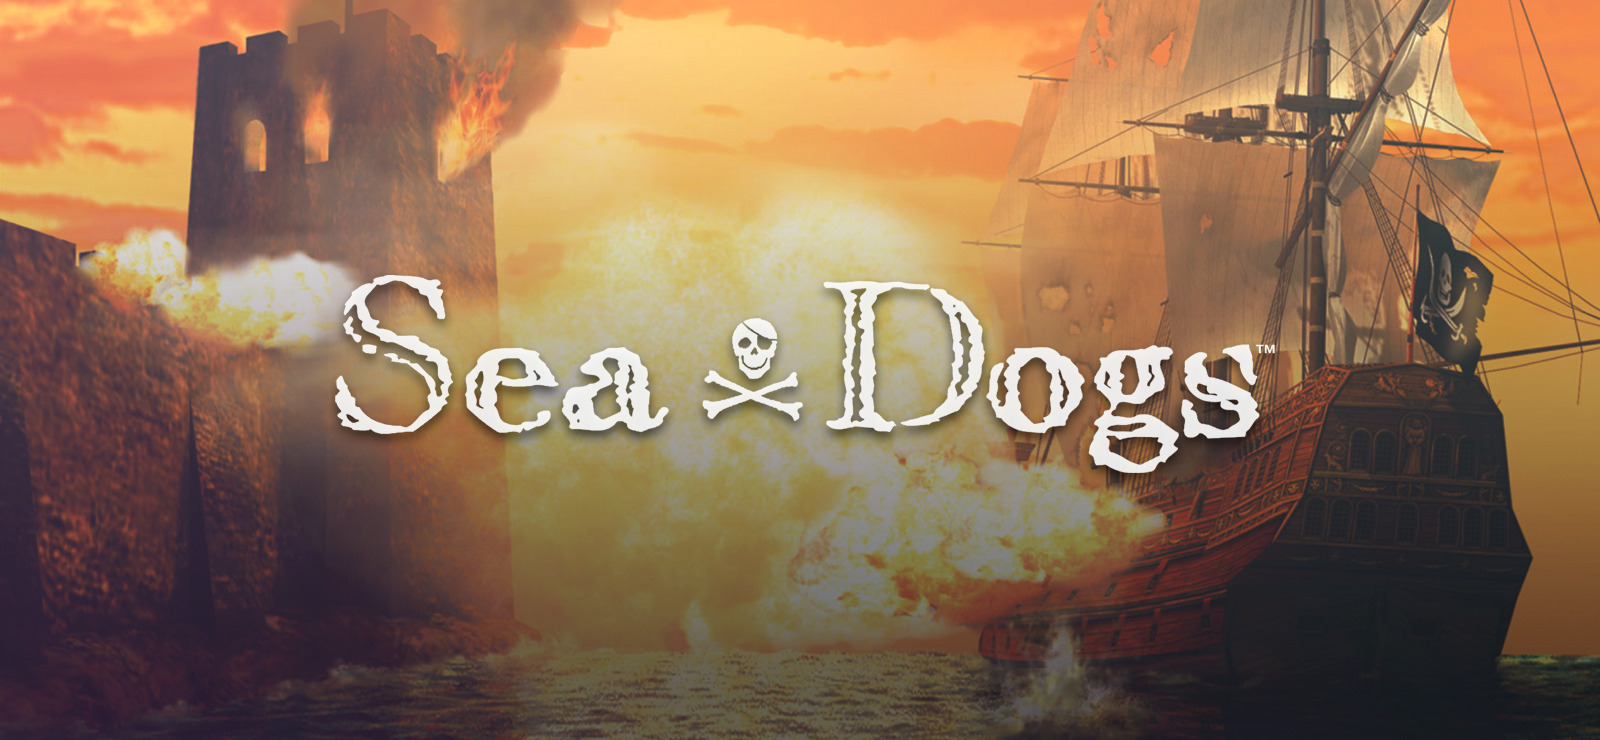 Sea dogs steam (107) фото